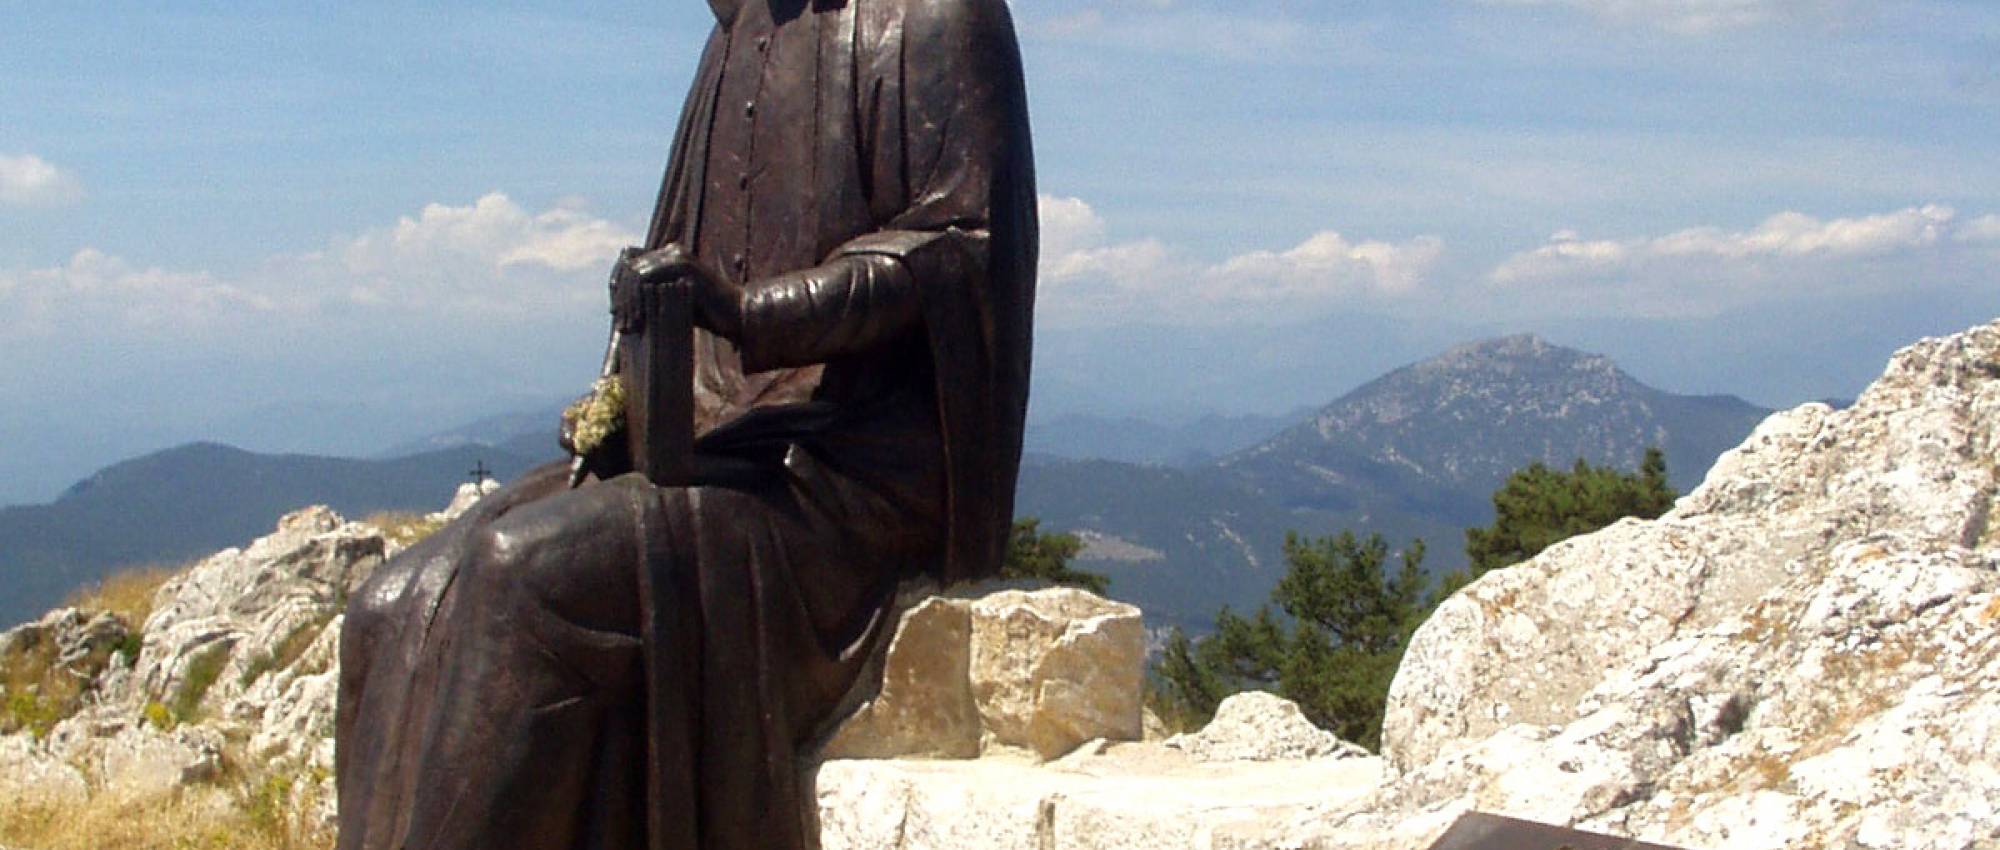 Monumento dedicado a Jacint Verdaguer en la Mare de Déu del Mont. CC BY-SA 3.0 - DavidianSkitzou / Wikimedia Commons